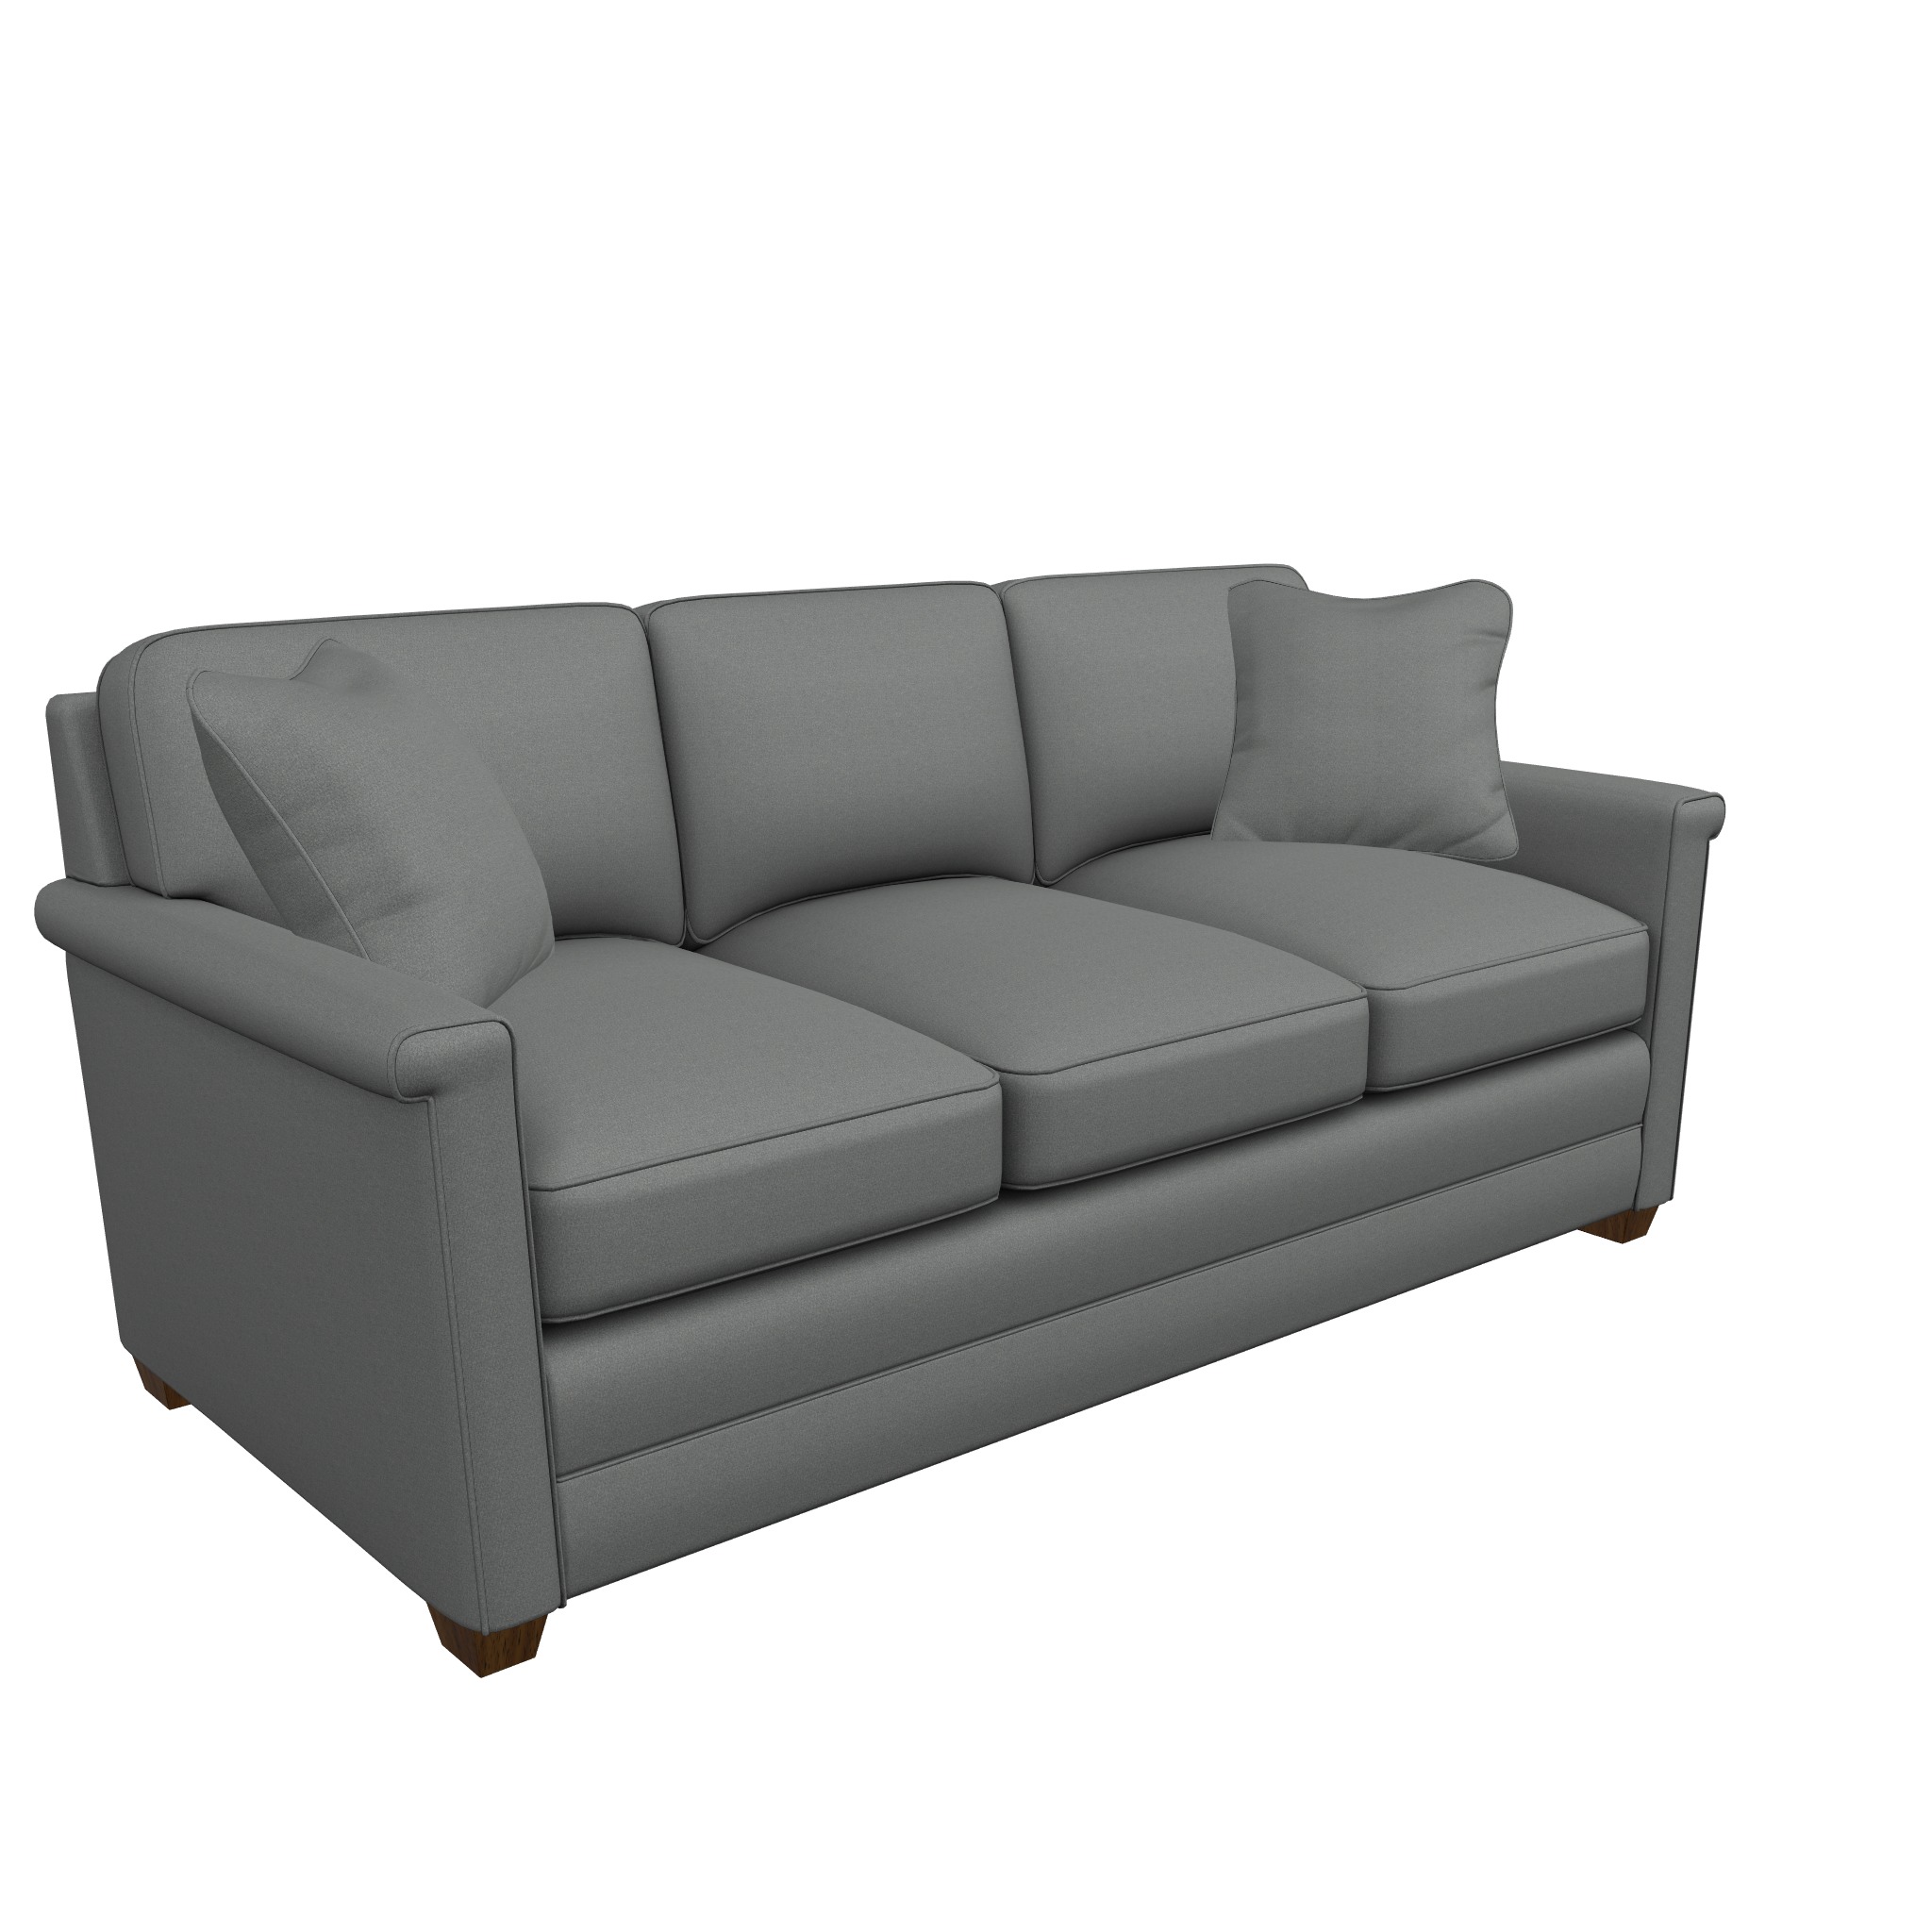 Image - 1 - Bexley Fabric Sofa